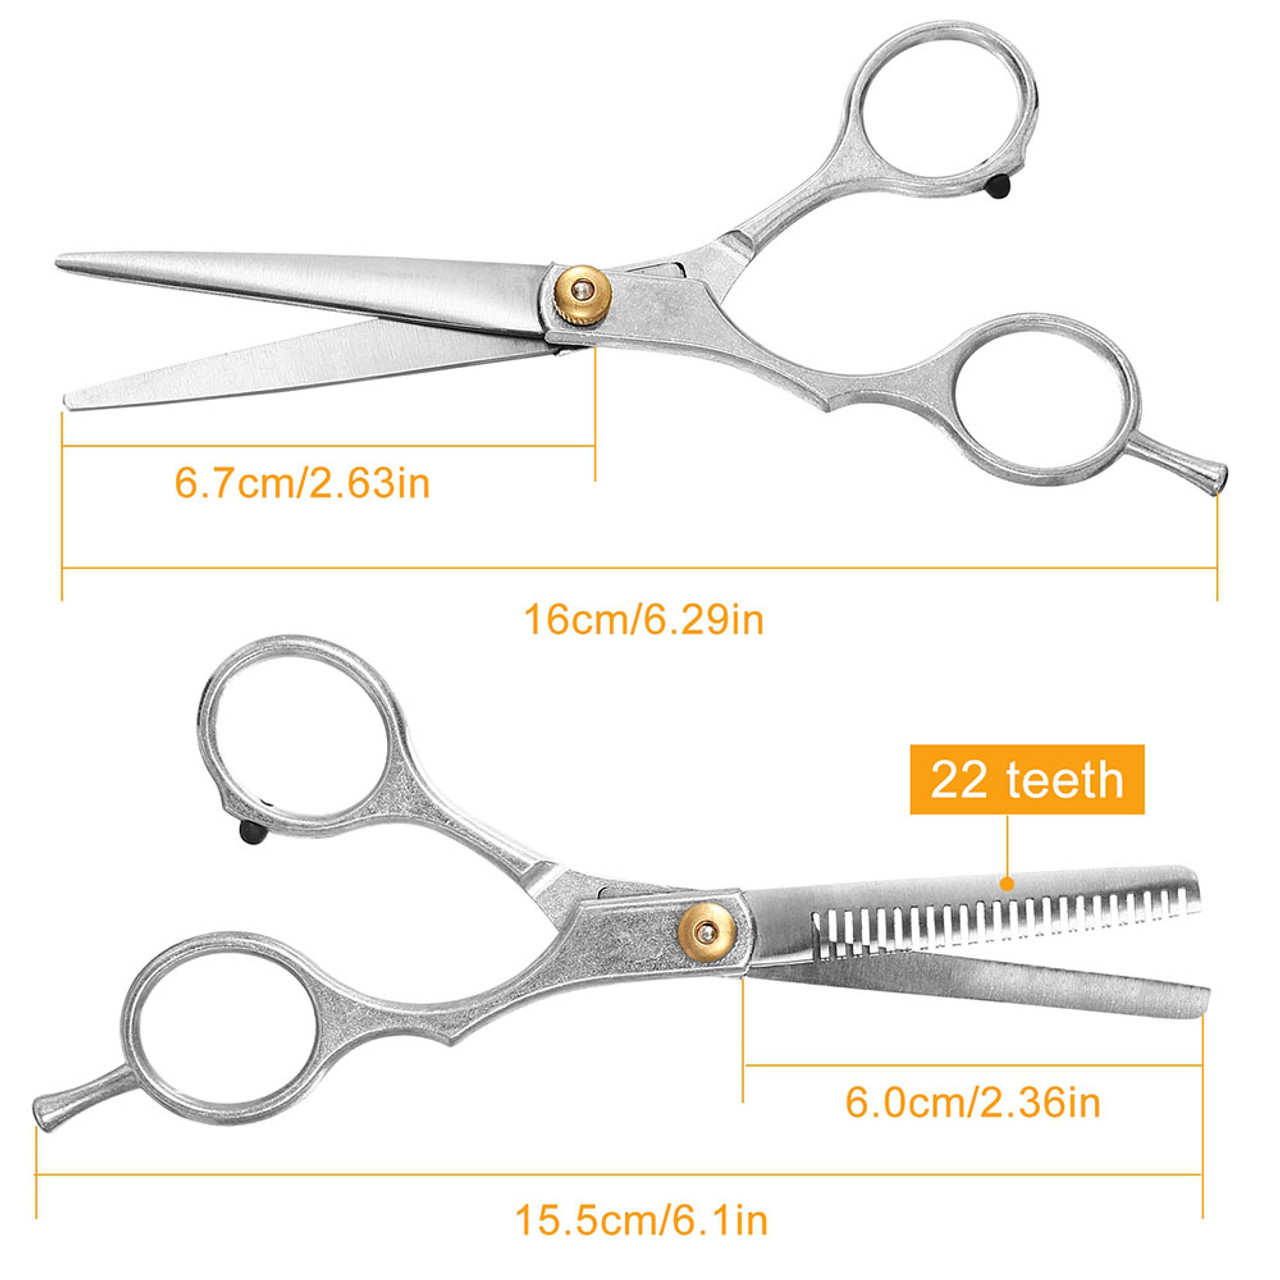 Professional Hair Cutting Scissors Set product image